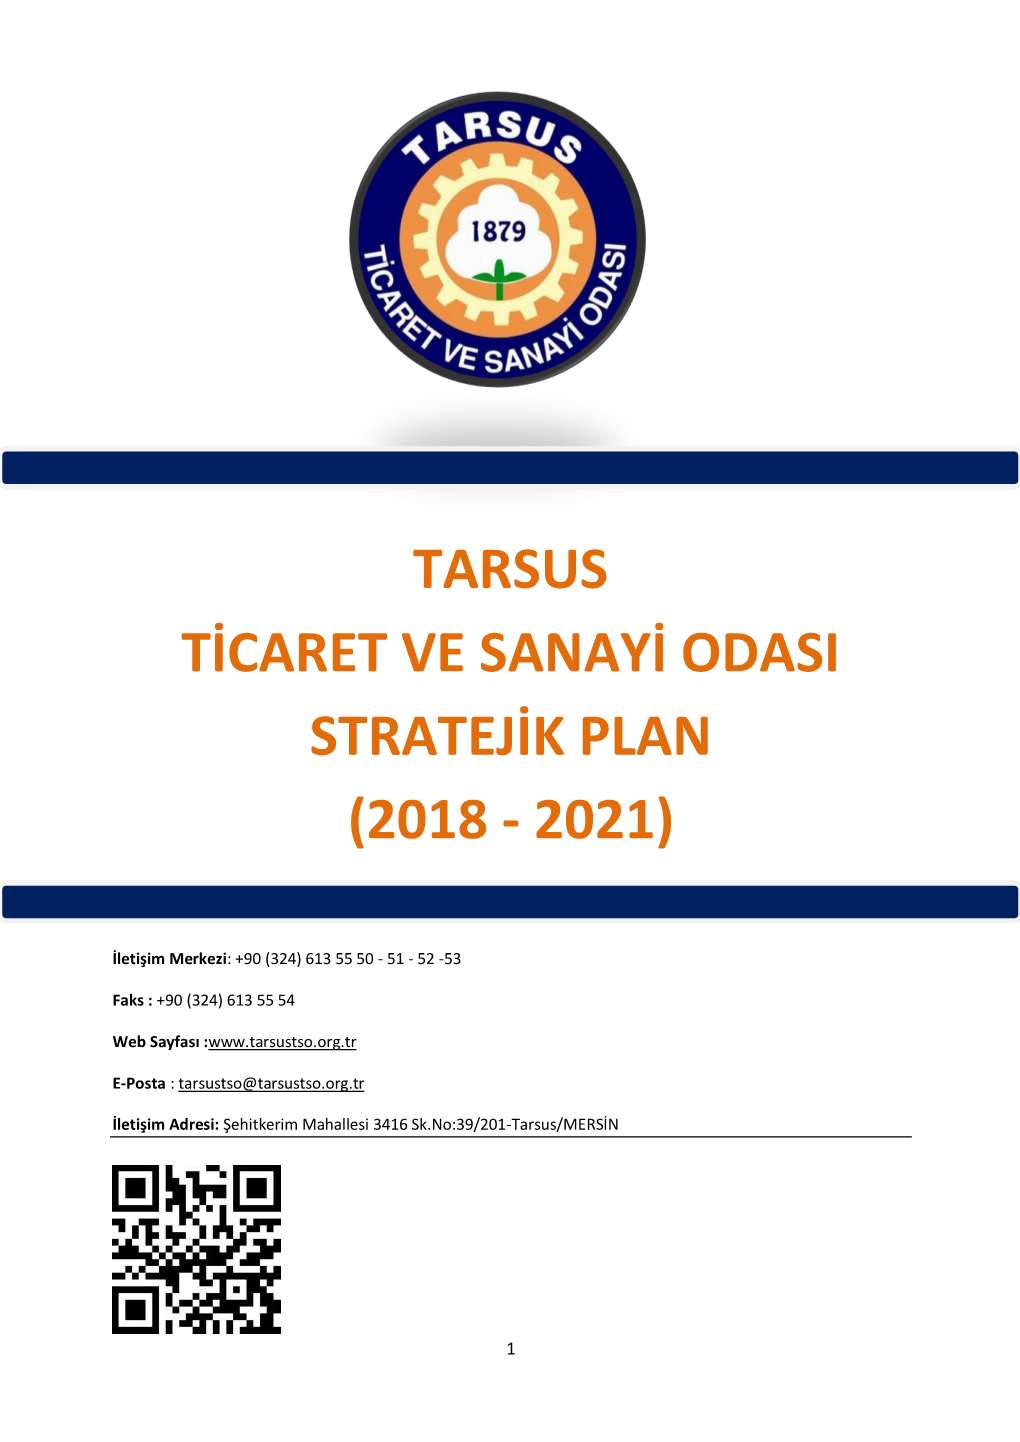 Tarsus Ticaret Ve Sanayi Odasi Stratejik Plan (2018 - 2021)